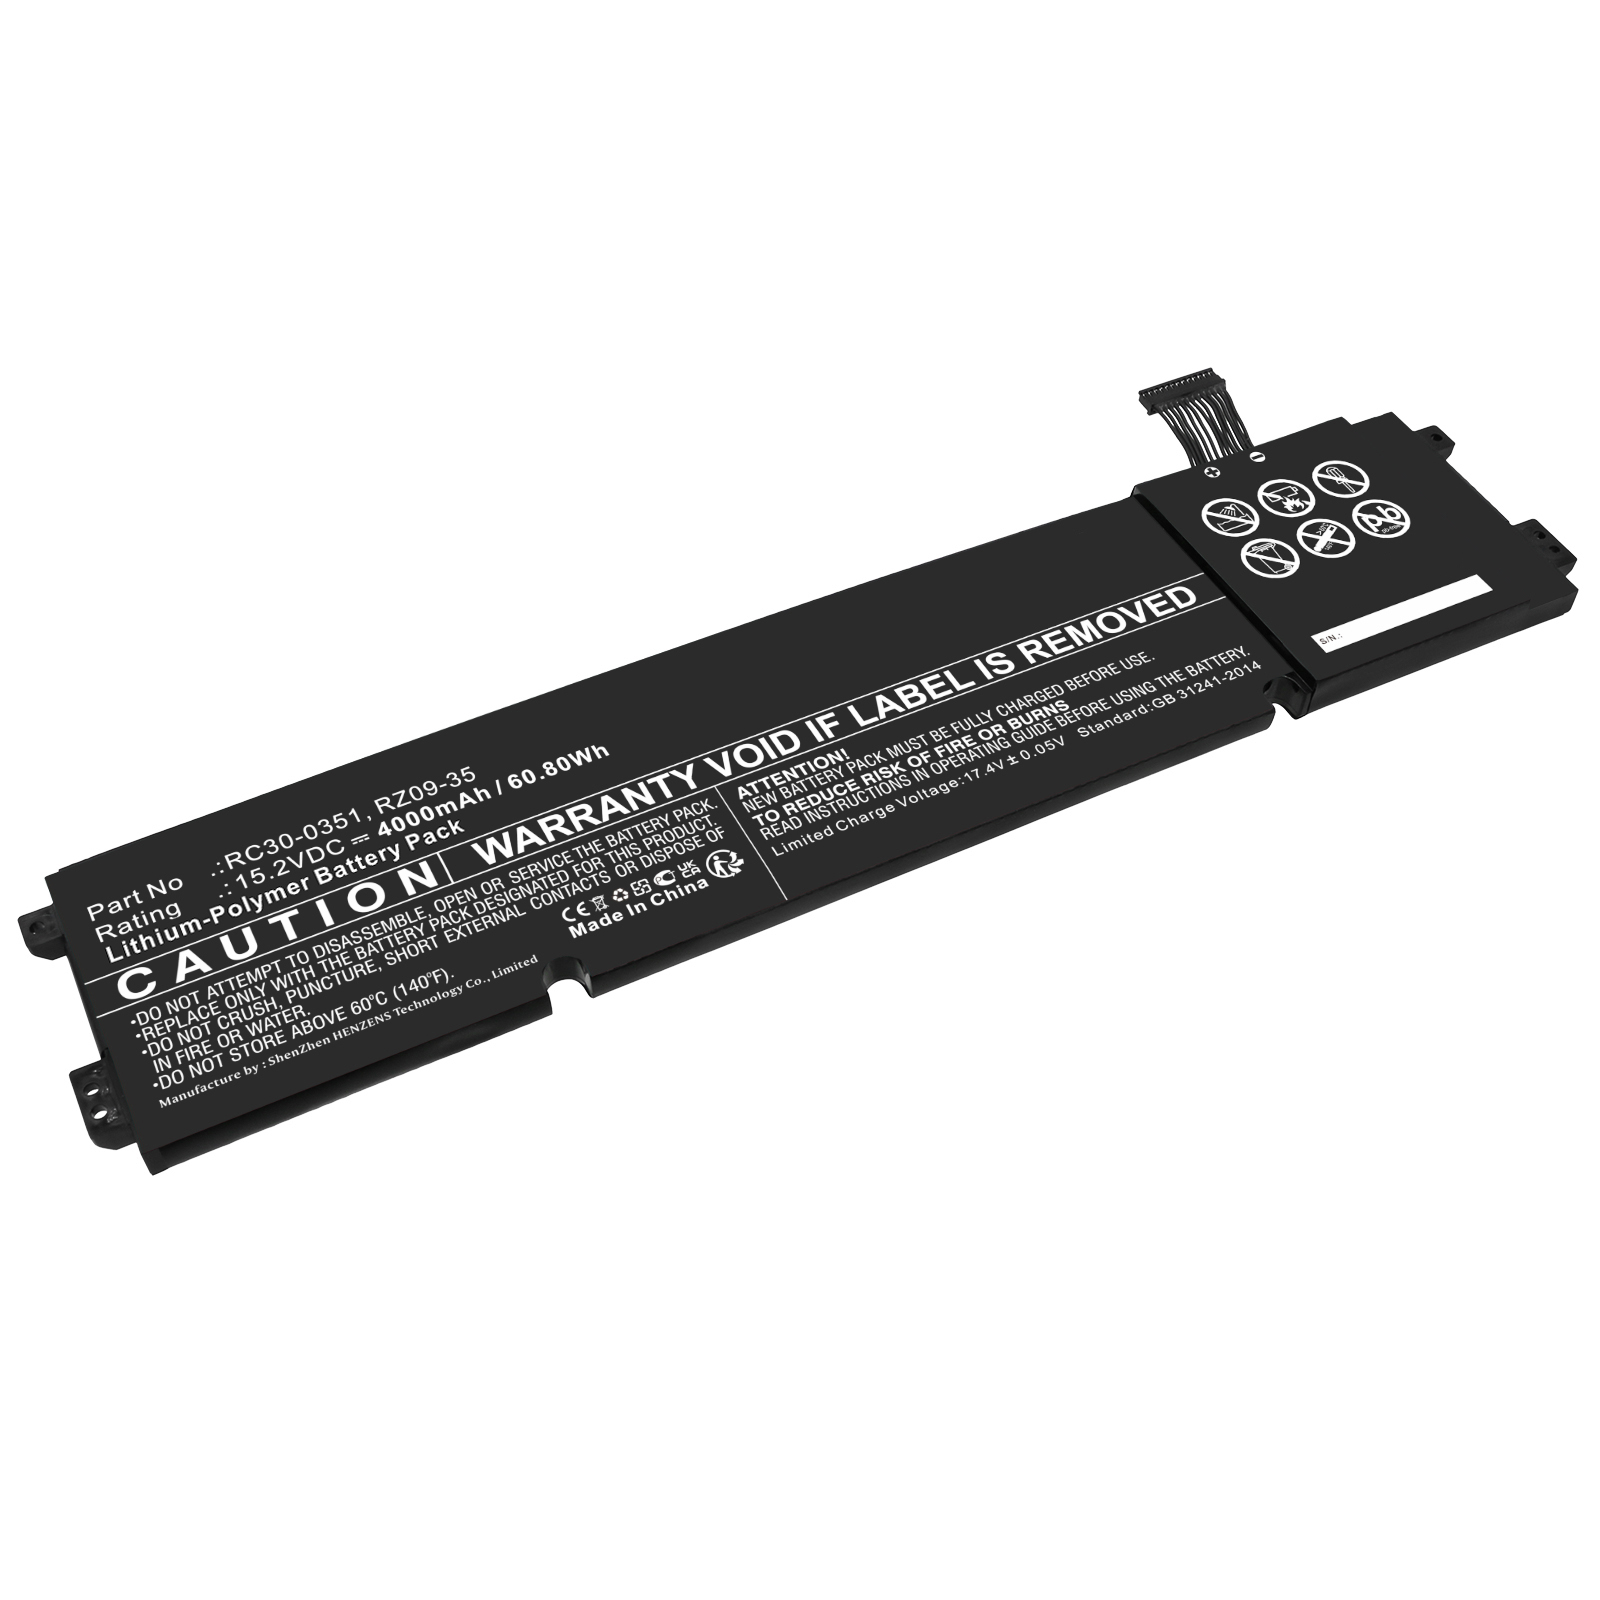 Synergy Digital Laptop Battery, Compatible with Razer RC30-0351 Laptop Battery (Li-Pol, 15.2V, 4000mAh)